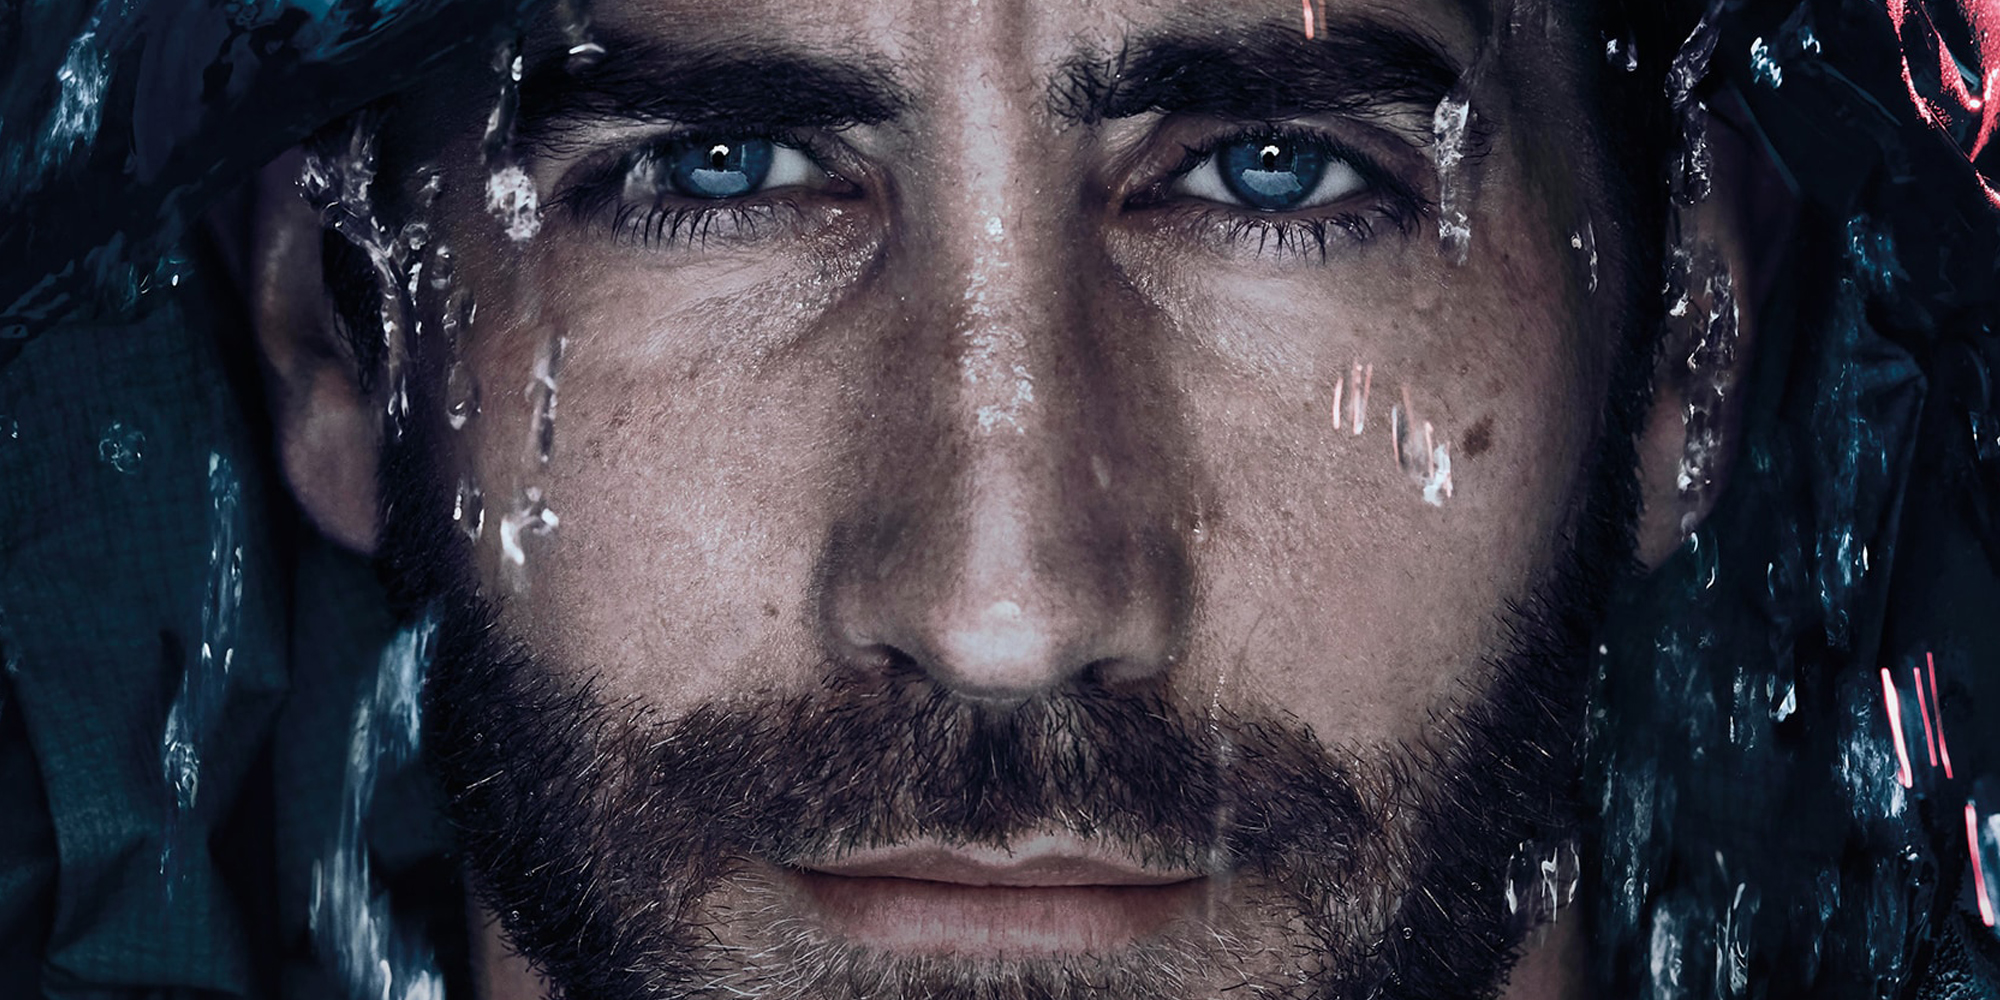 Prada Luna Rossa Ocean Fragrance Film Starring Jake Gyllenhaal | LES FAÇONS